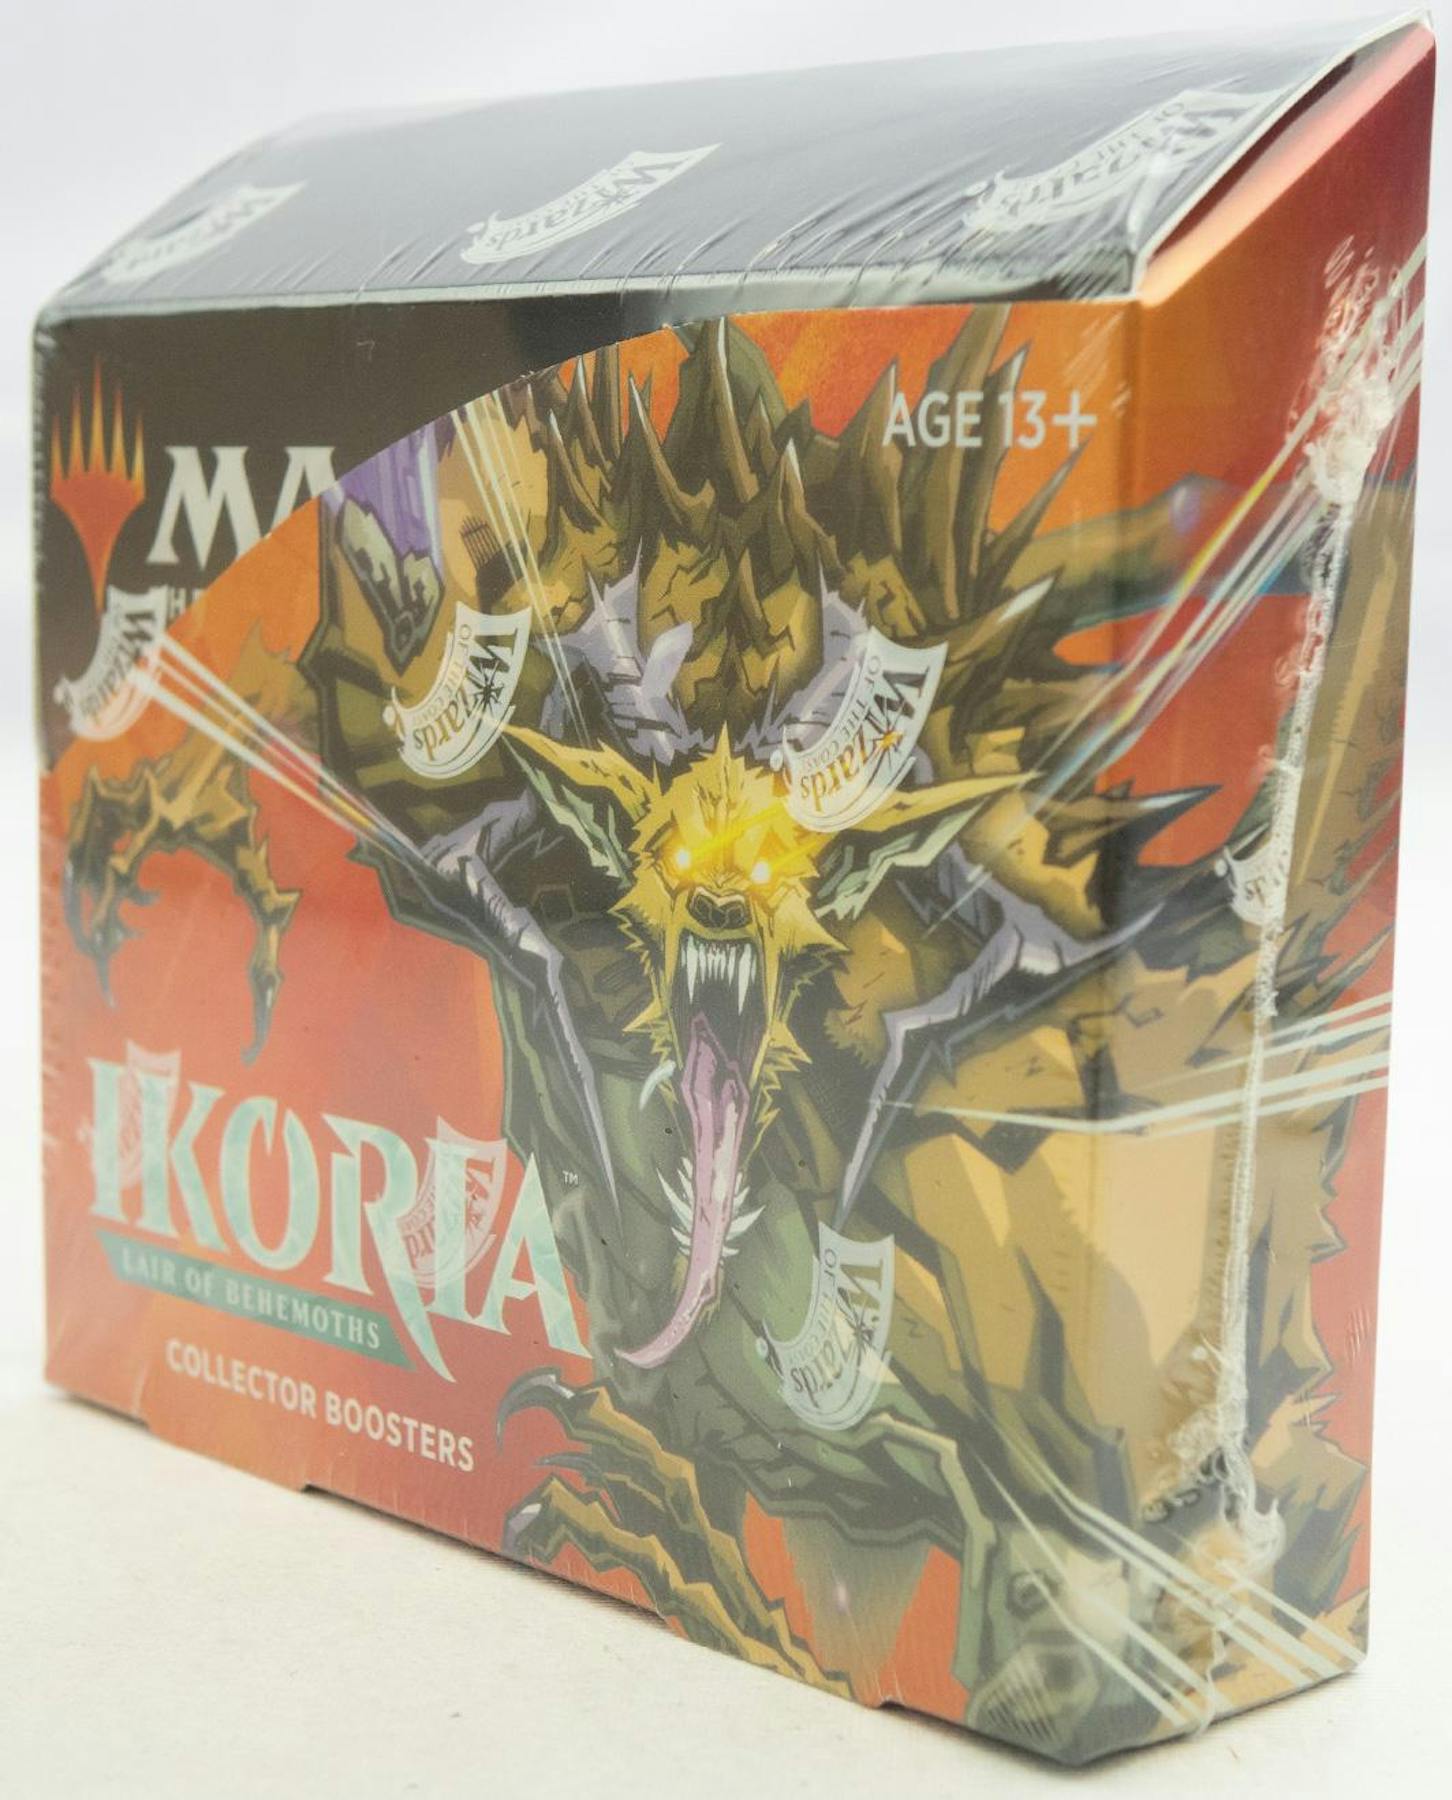 Ikoria Collector Booster Box